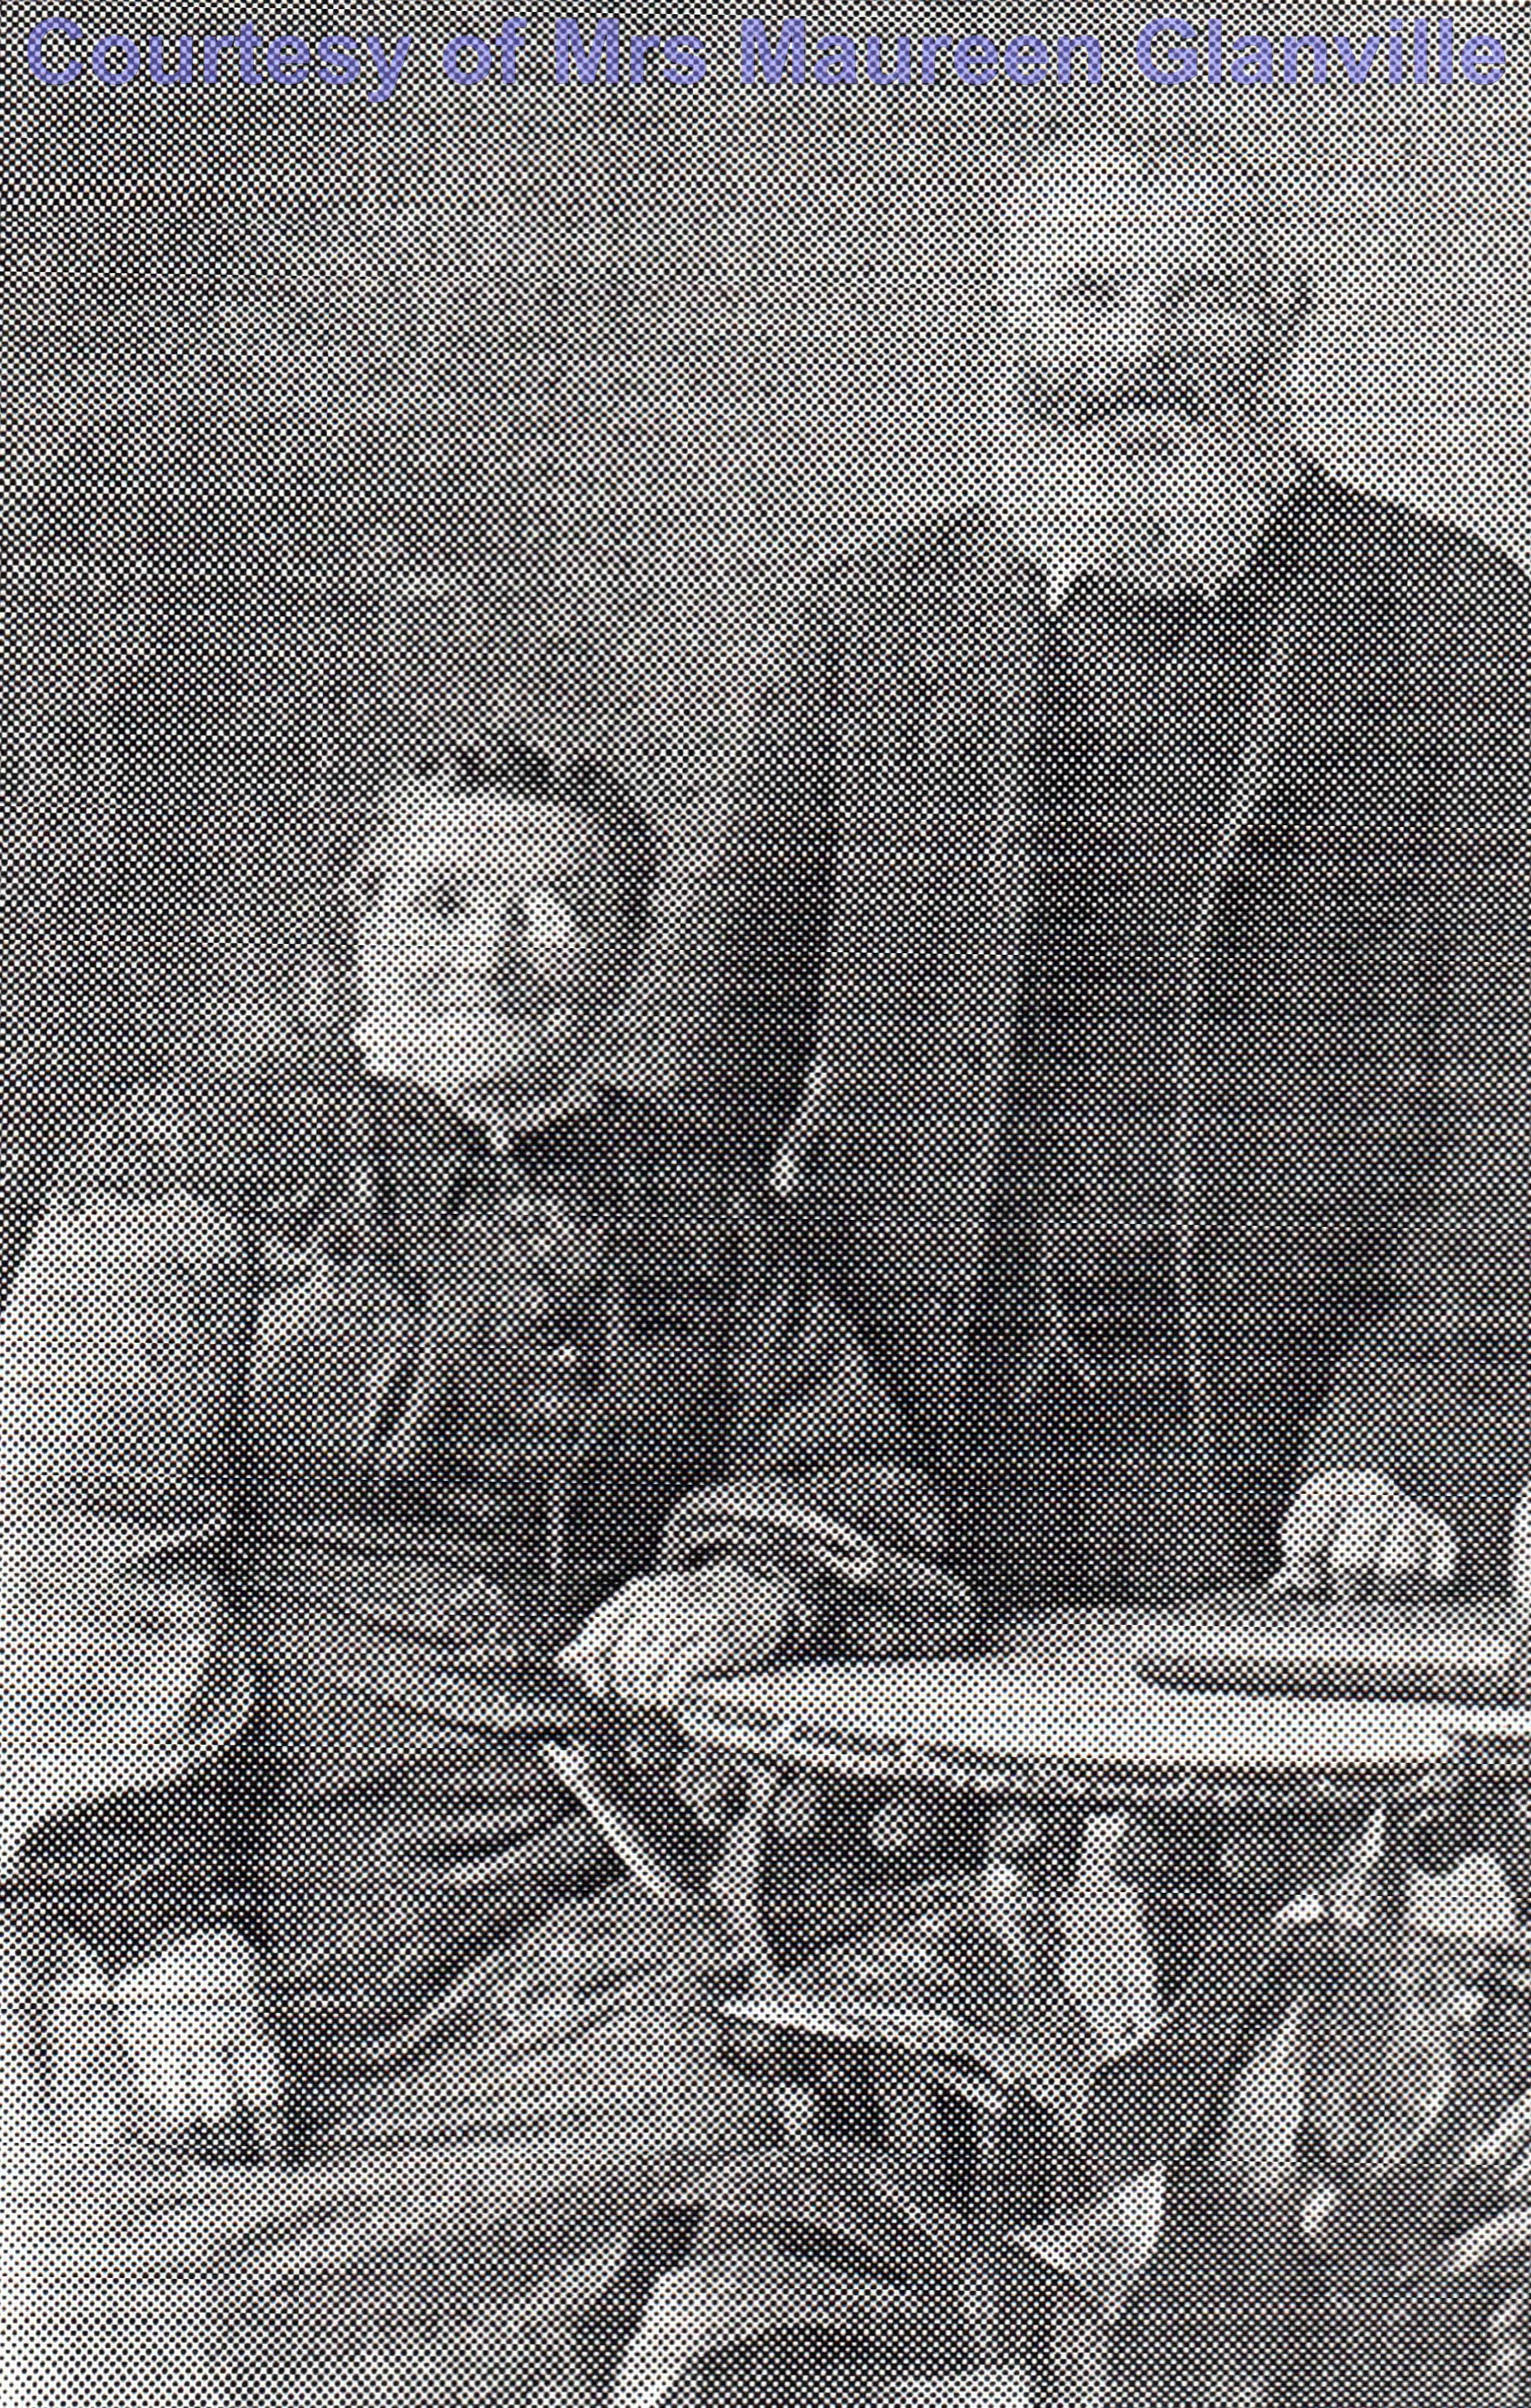 Richard Penna & sister Mary Anne Clatworthy